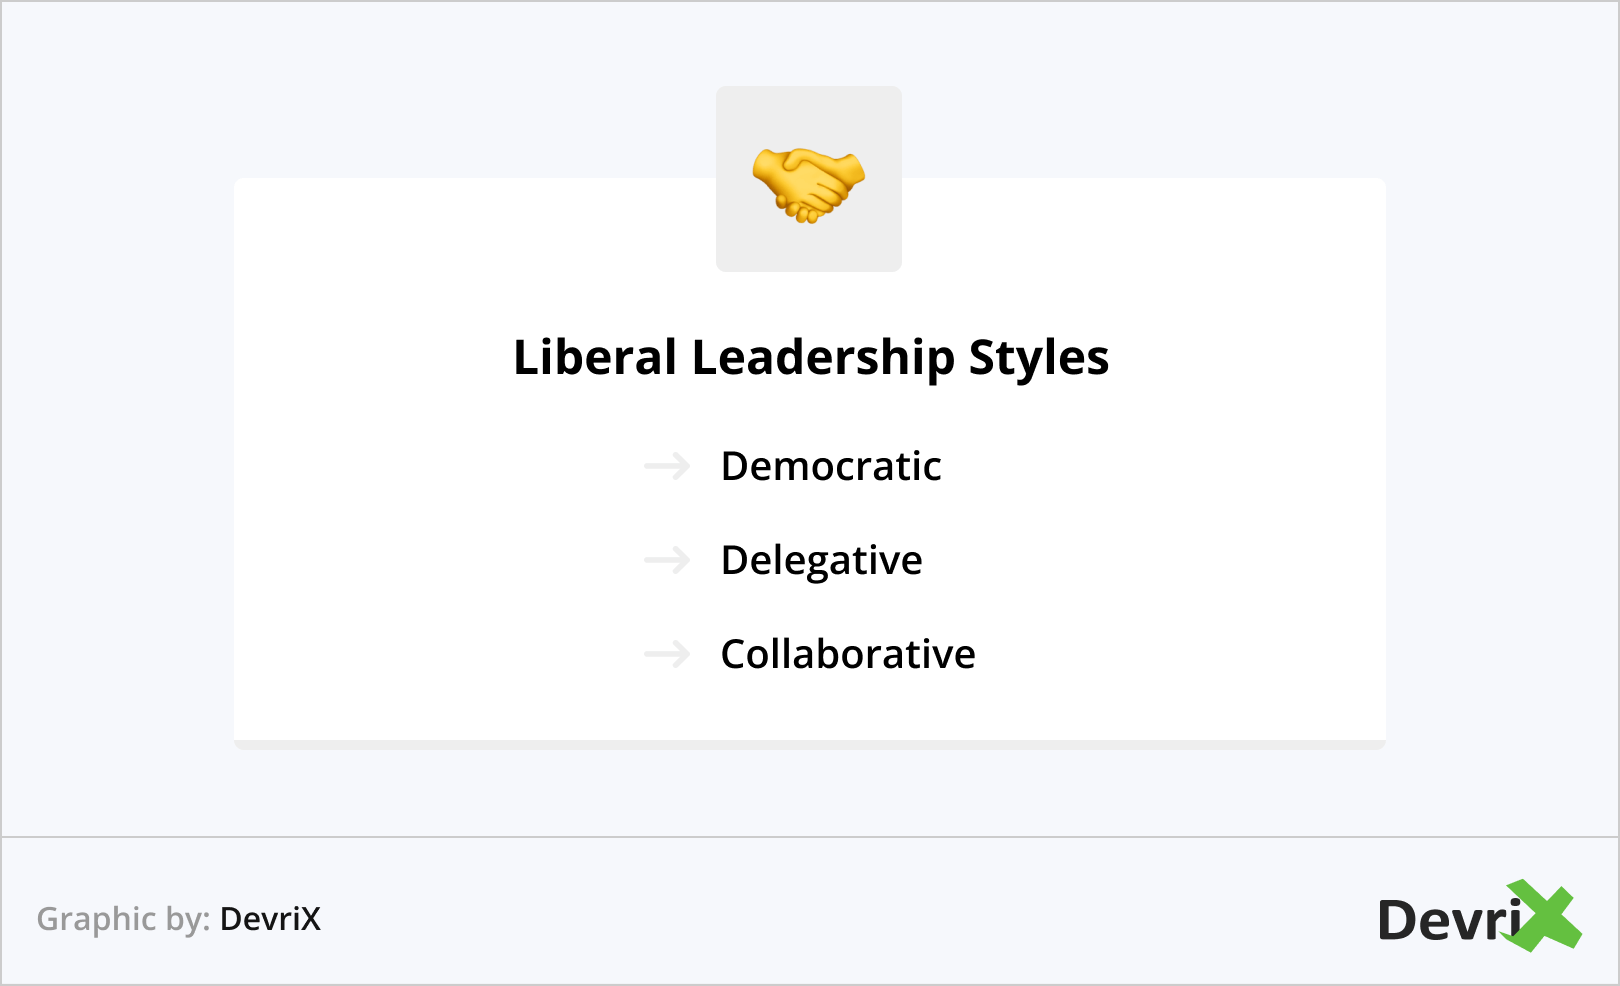 Liberal Leadership Styles